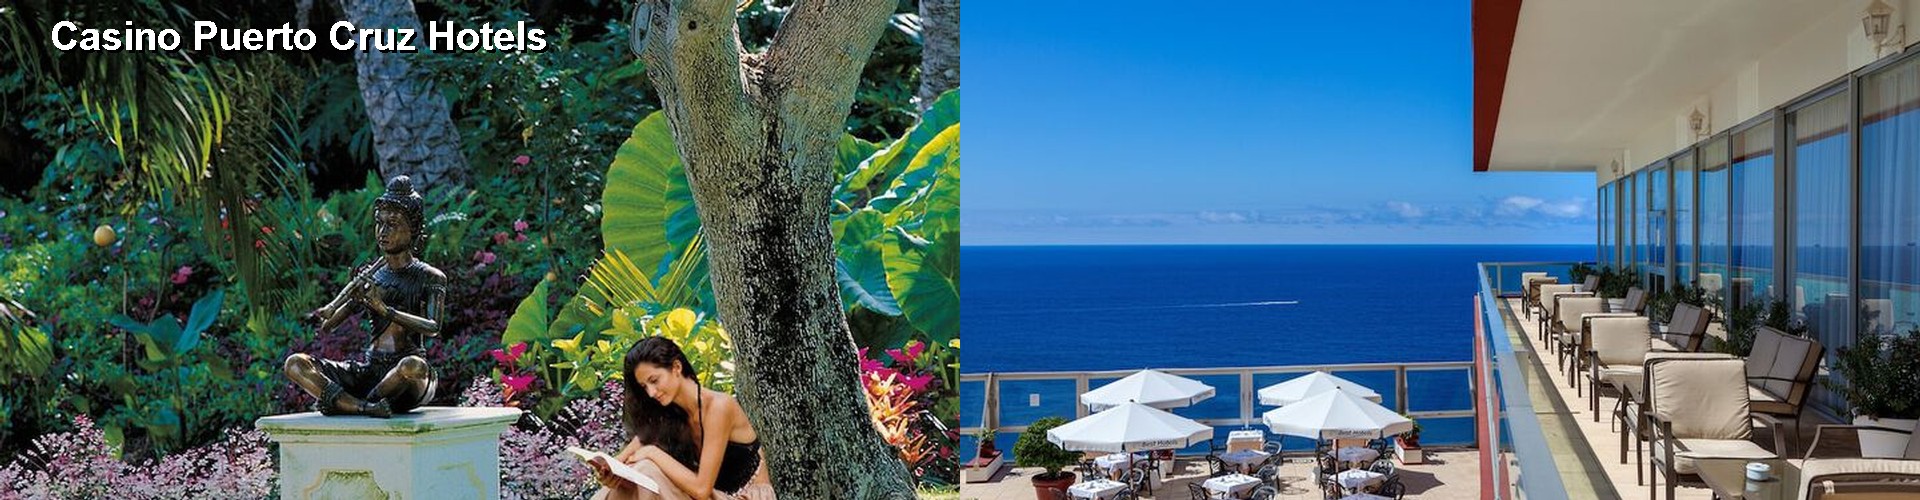 5 Best Hotels near Casino Puerto Cruz